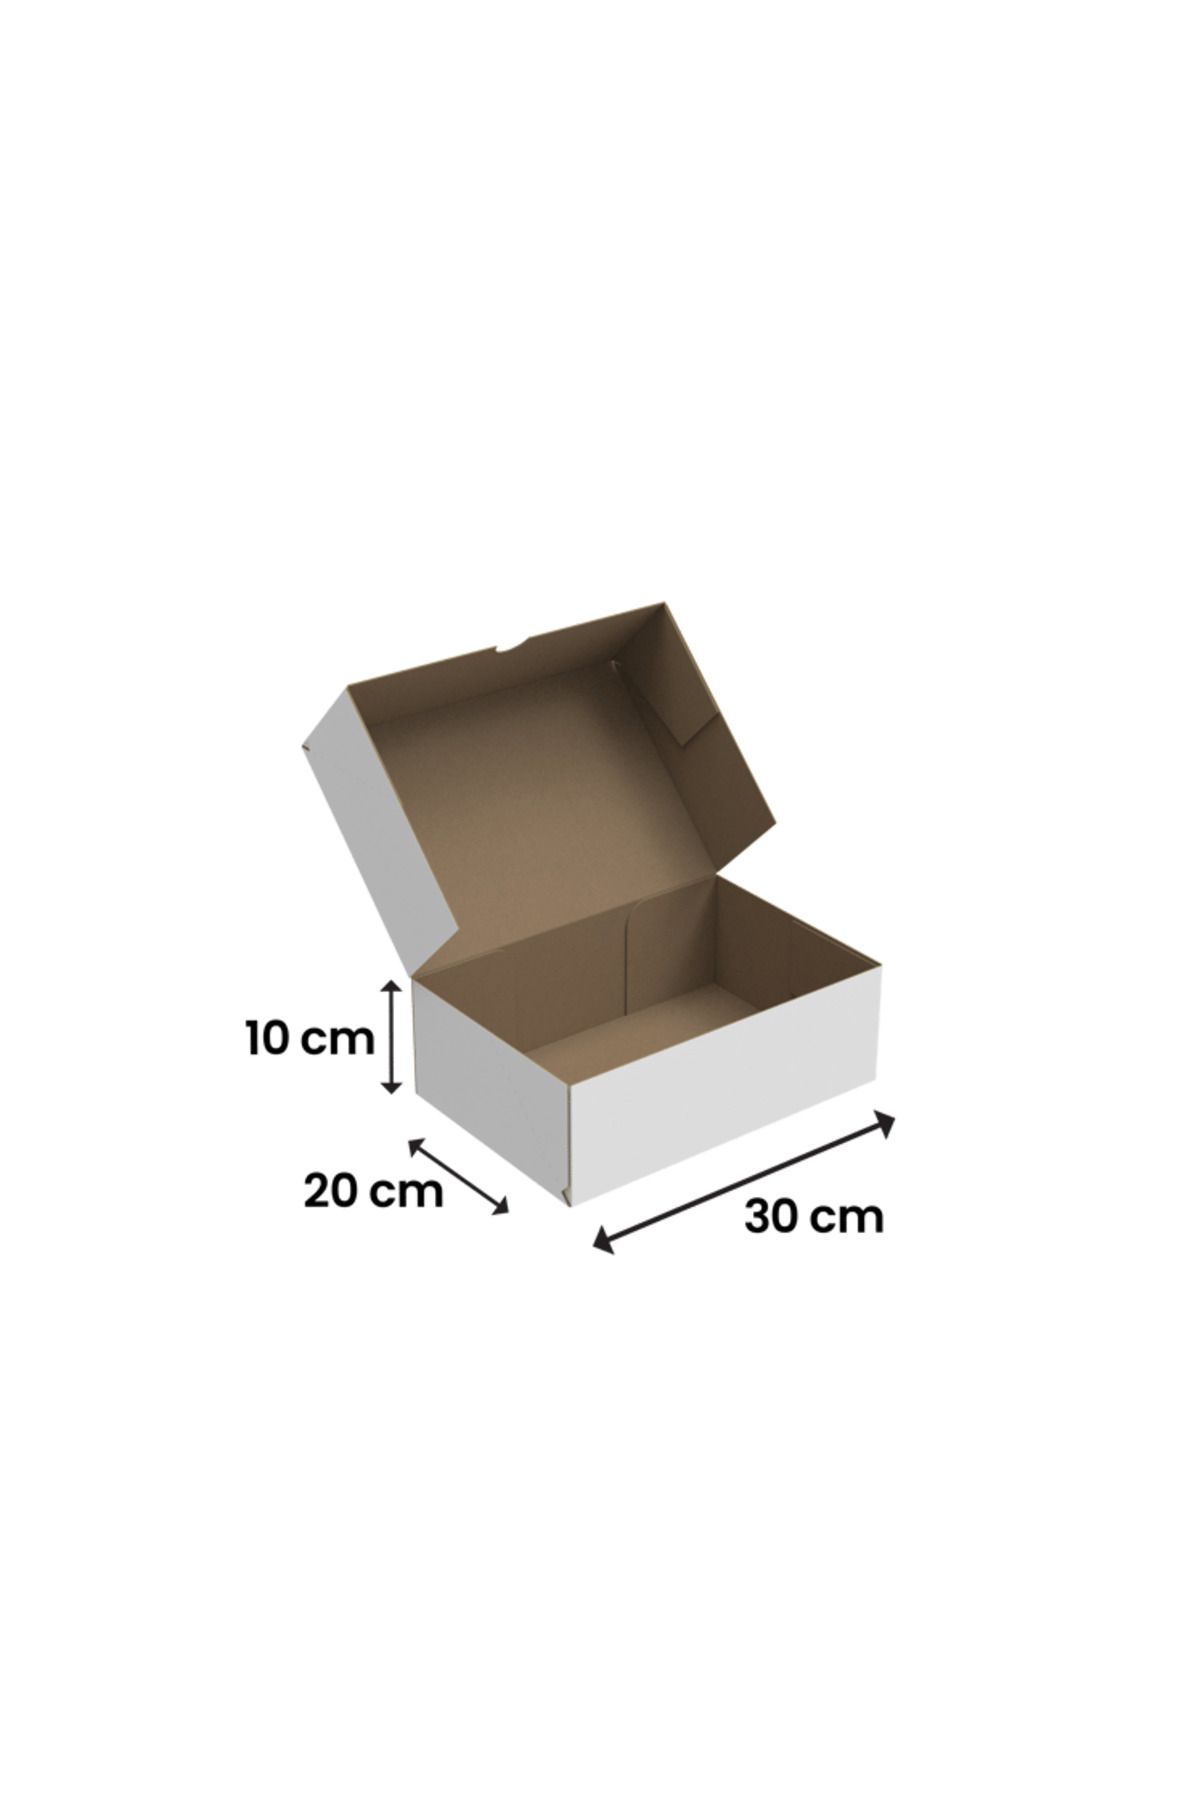 Packanya 30x20x10 - Beyaz Kesimli Karton Kutu - Internet Ve Kargo Kutusu - 25 Adet